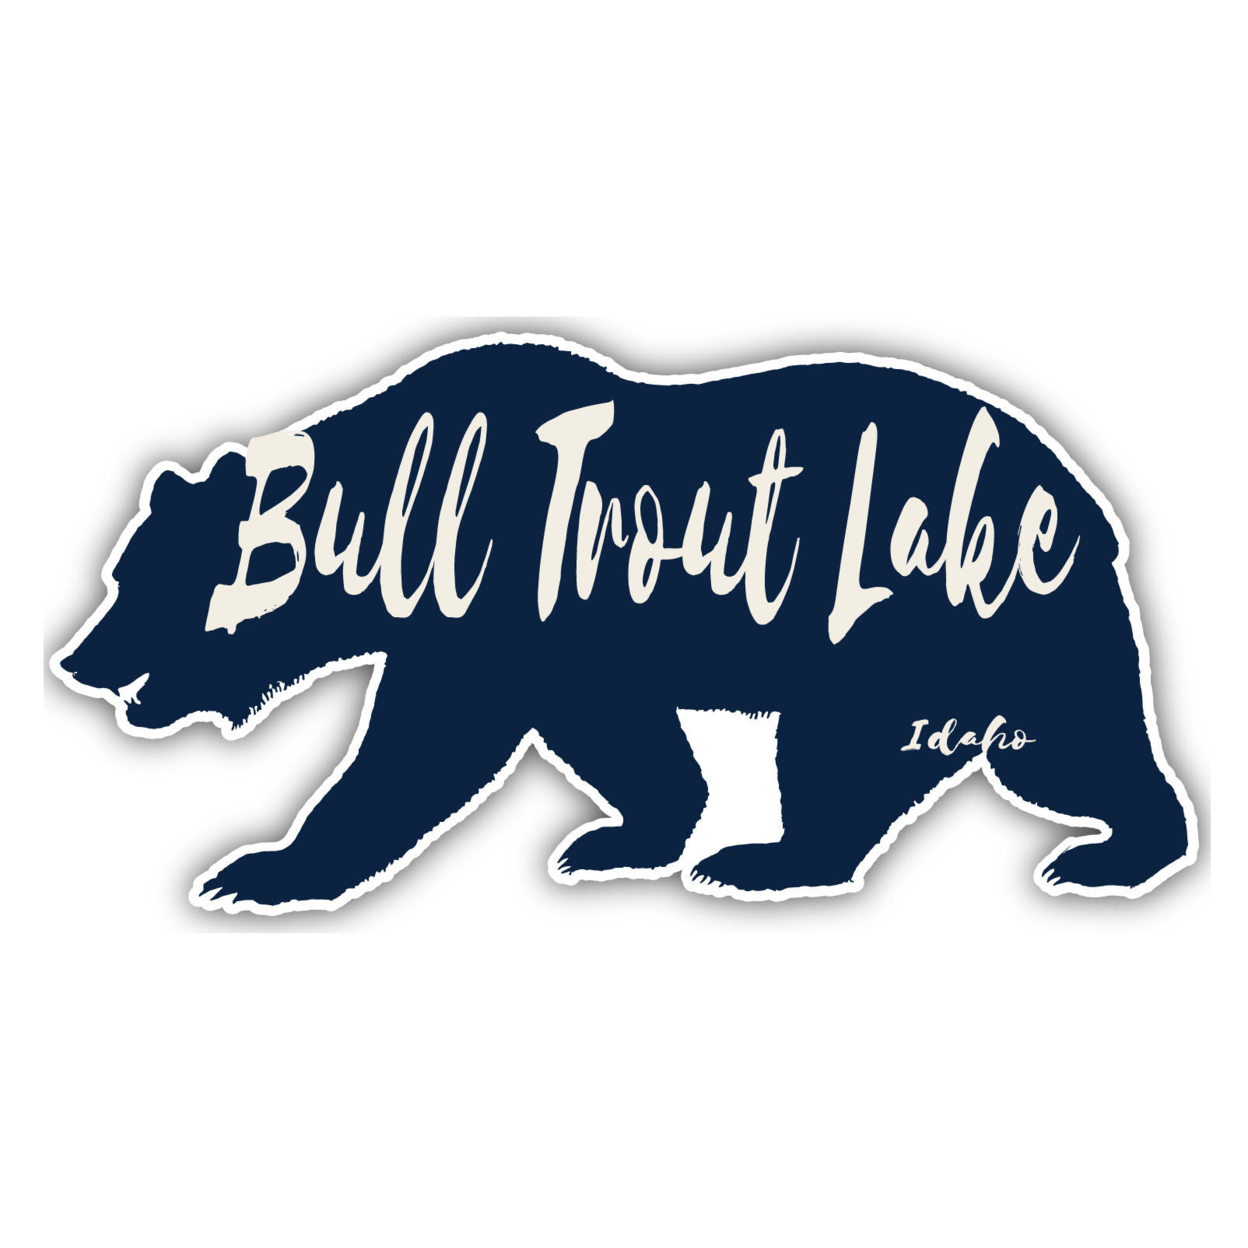 Bull Trout Lake Idaho Souvenir Decorative Stickers (Choose Theme And Size) - Single Unit, 10-Inch, Bear